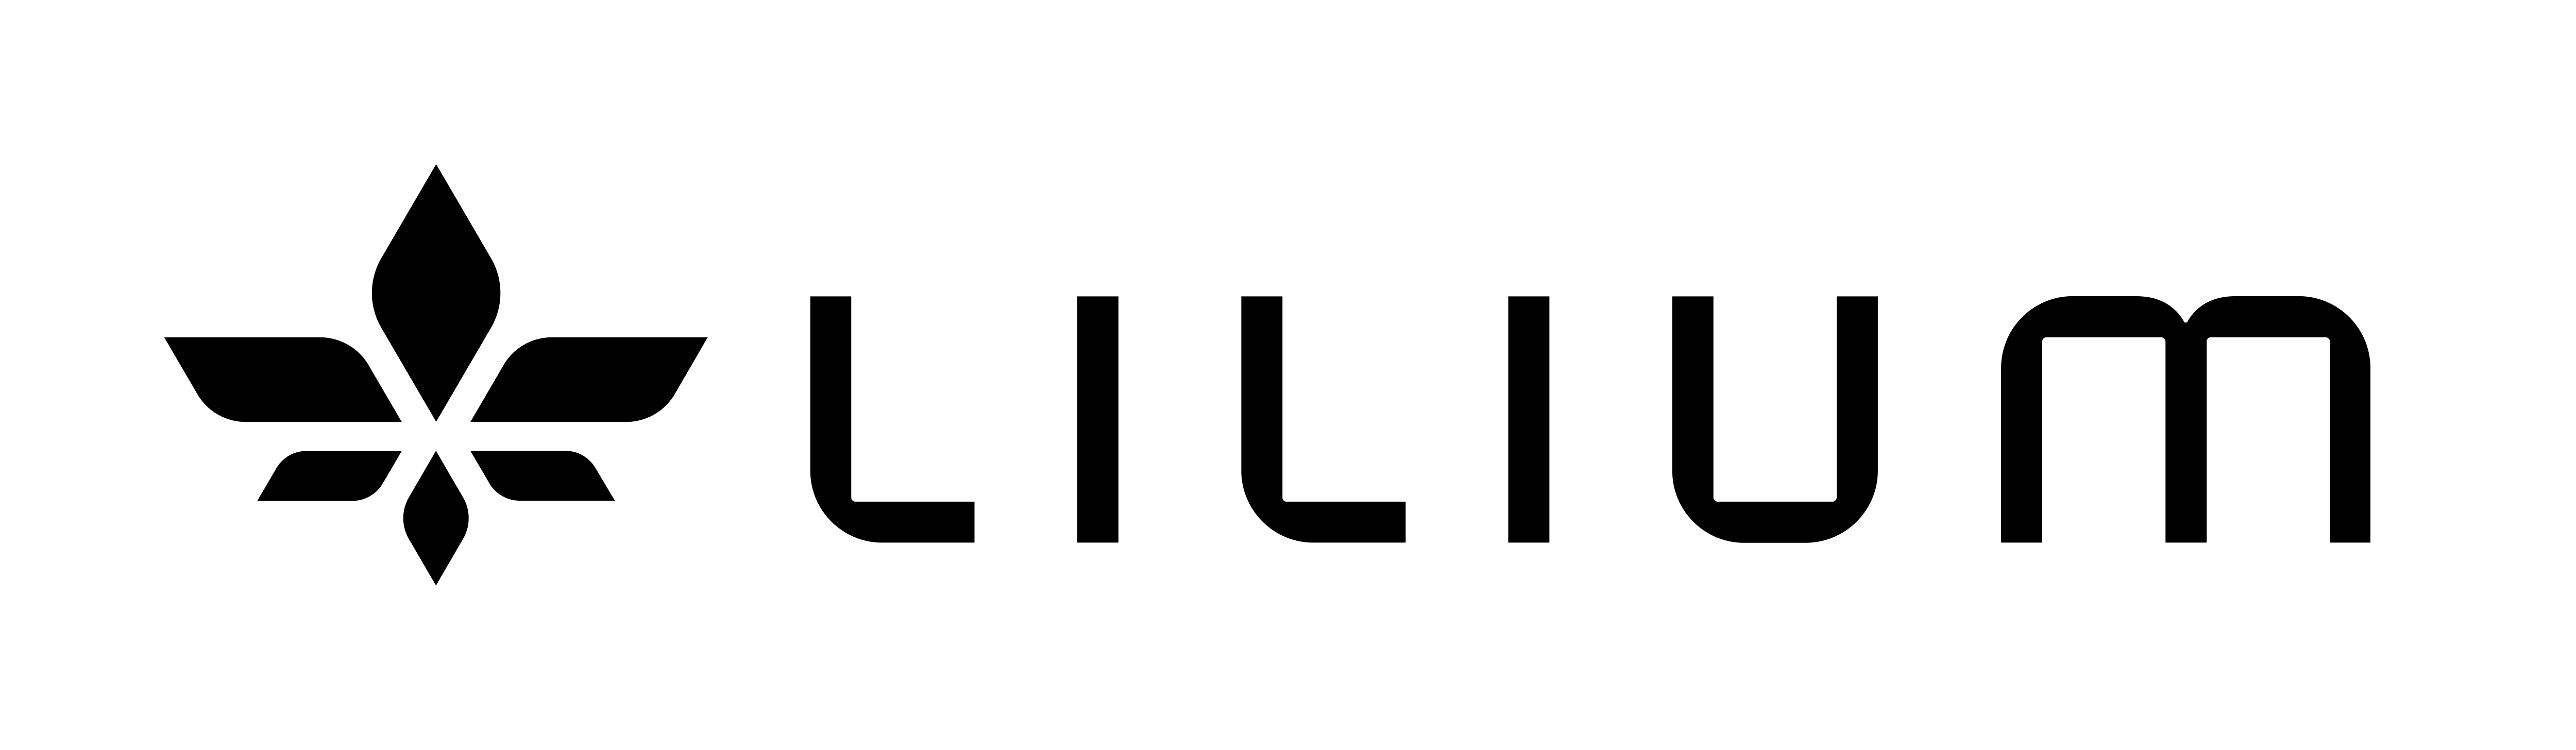 Logo for Lilium GmbH